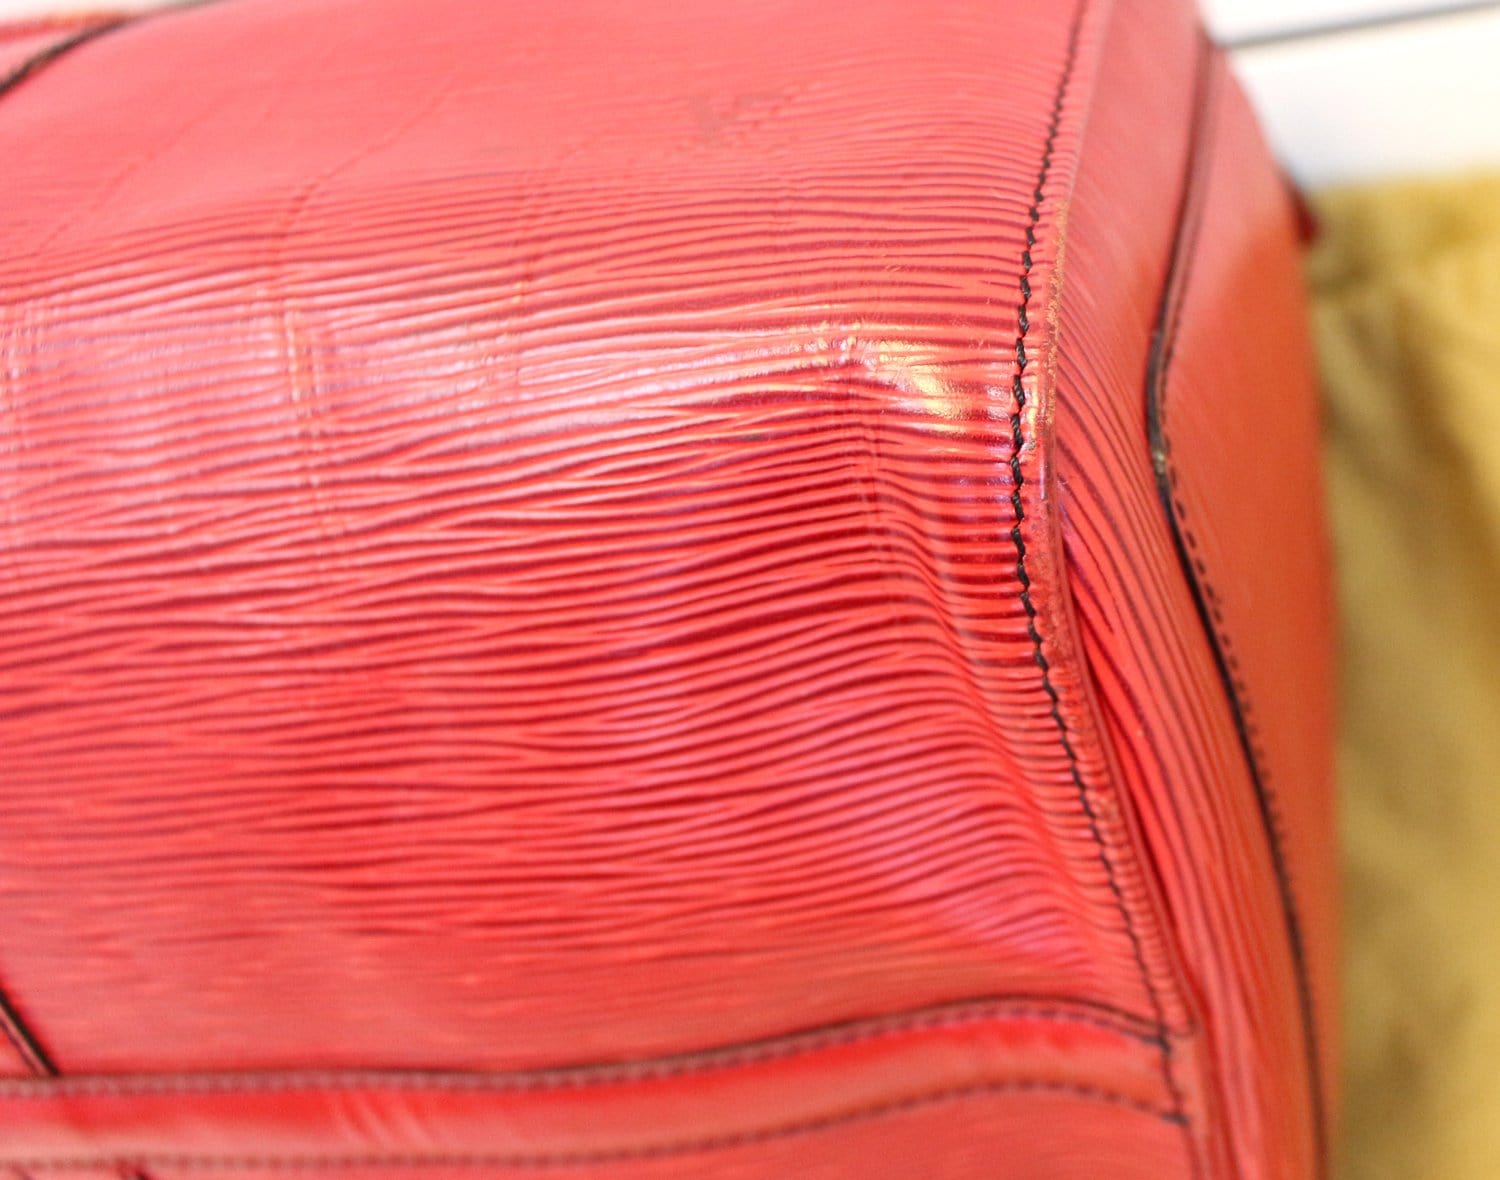 Louis Vuitton Red Epi Leather Keepall 45 Louis Vuitton